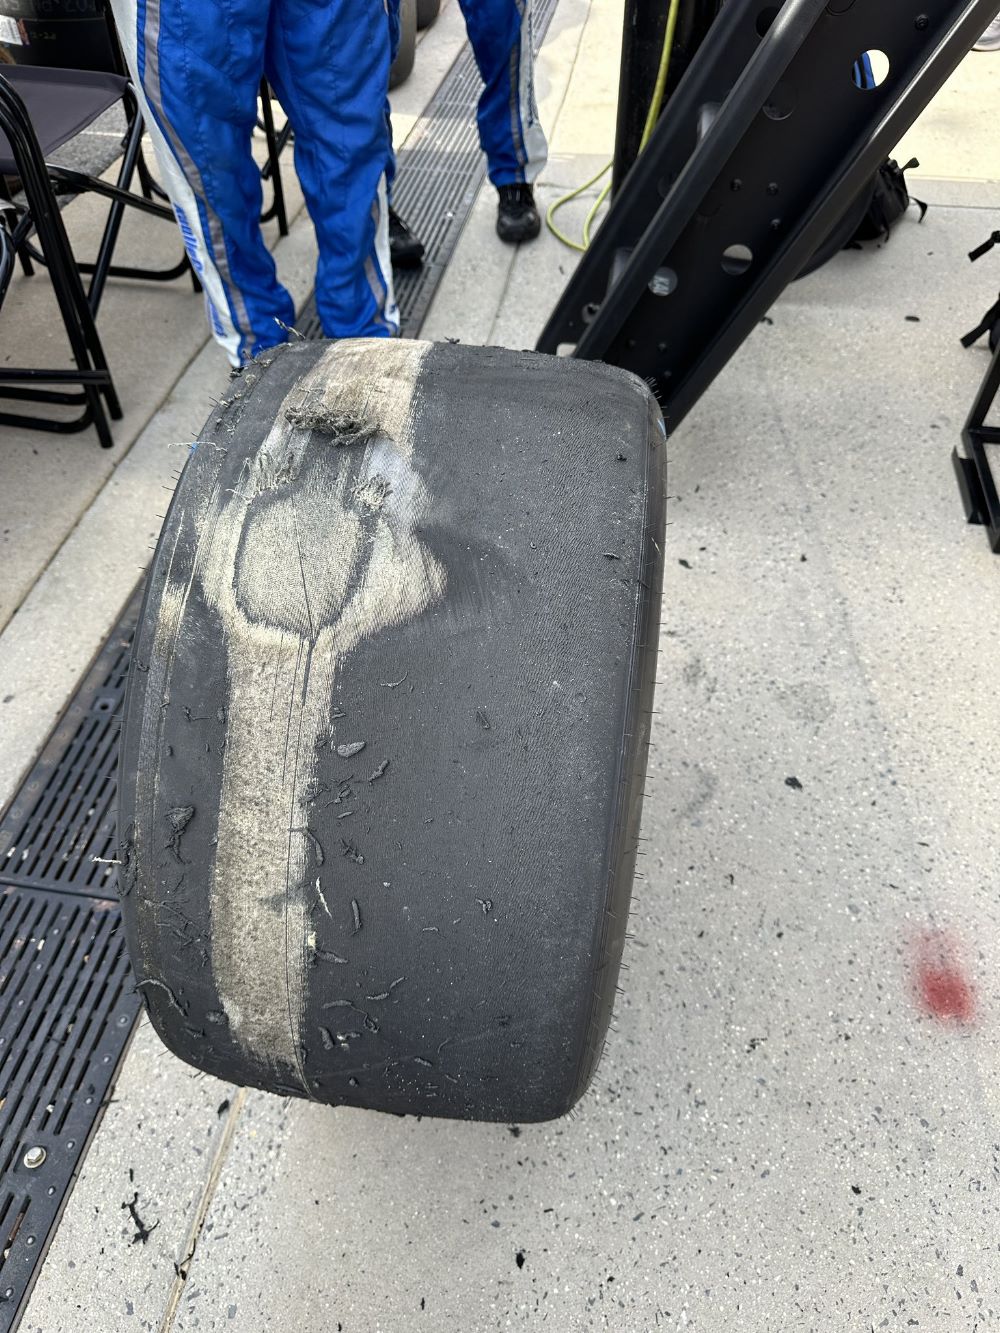 Worn Goodyear tire